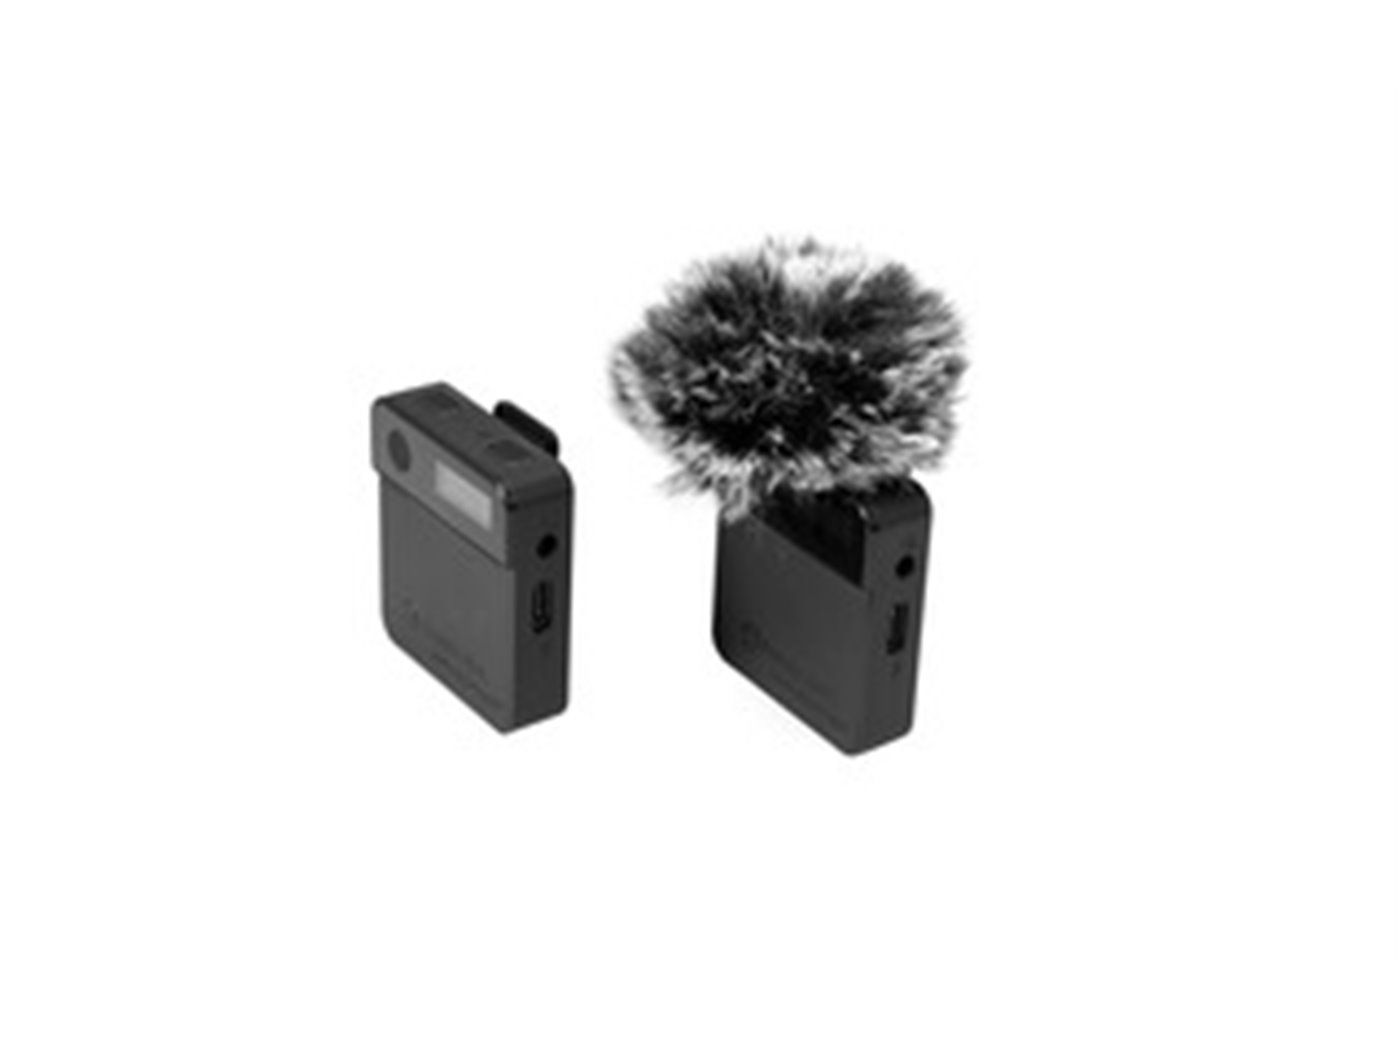 RELACART MIPASSPORT Wireless Cameramount Microphone System